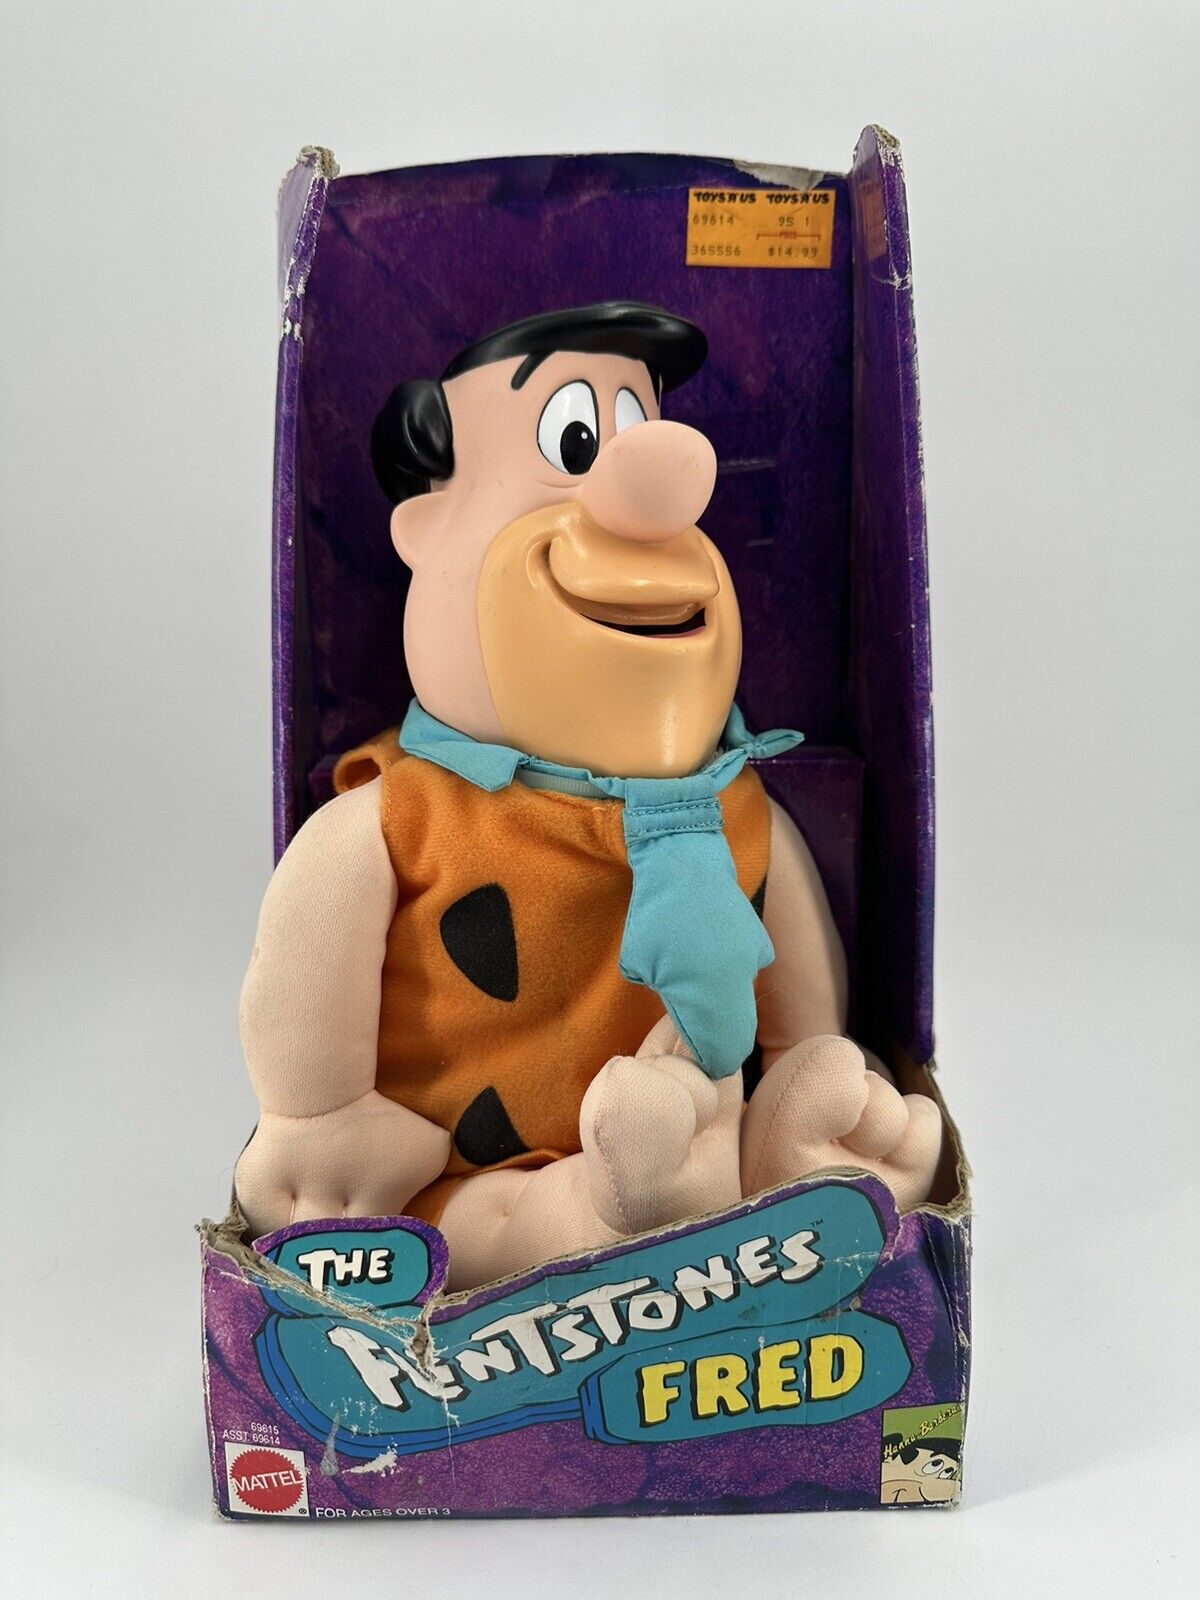 1993 Mattel The Flintstones Fred Plush with Vinyl Head - NIB